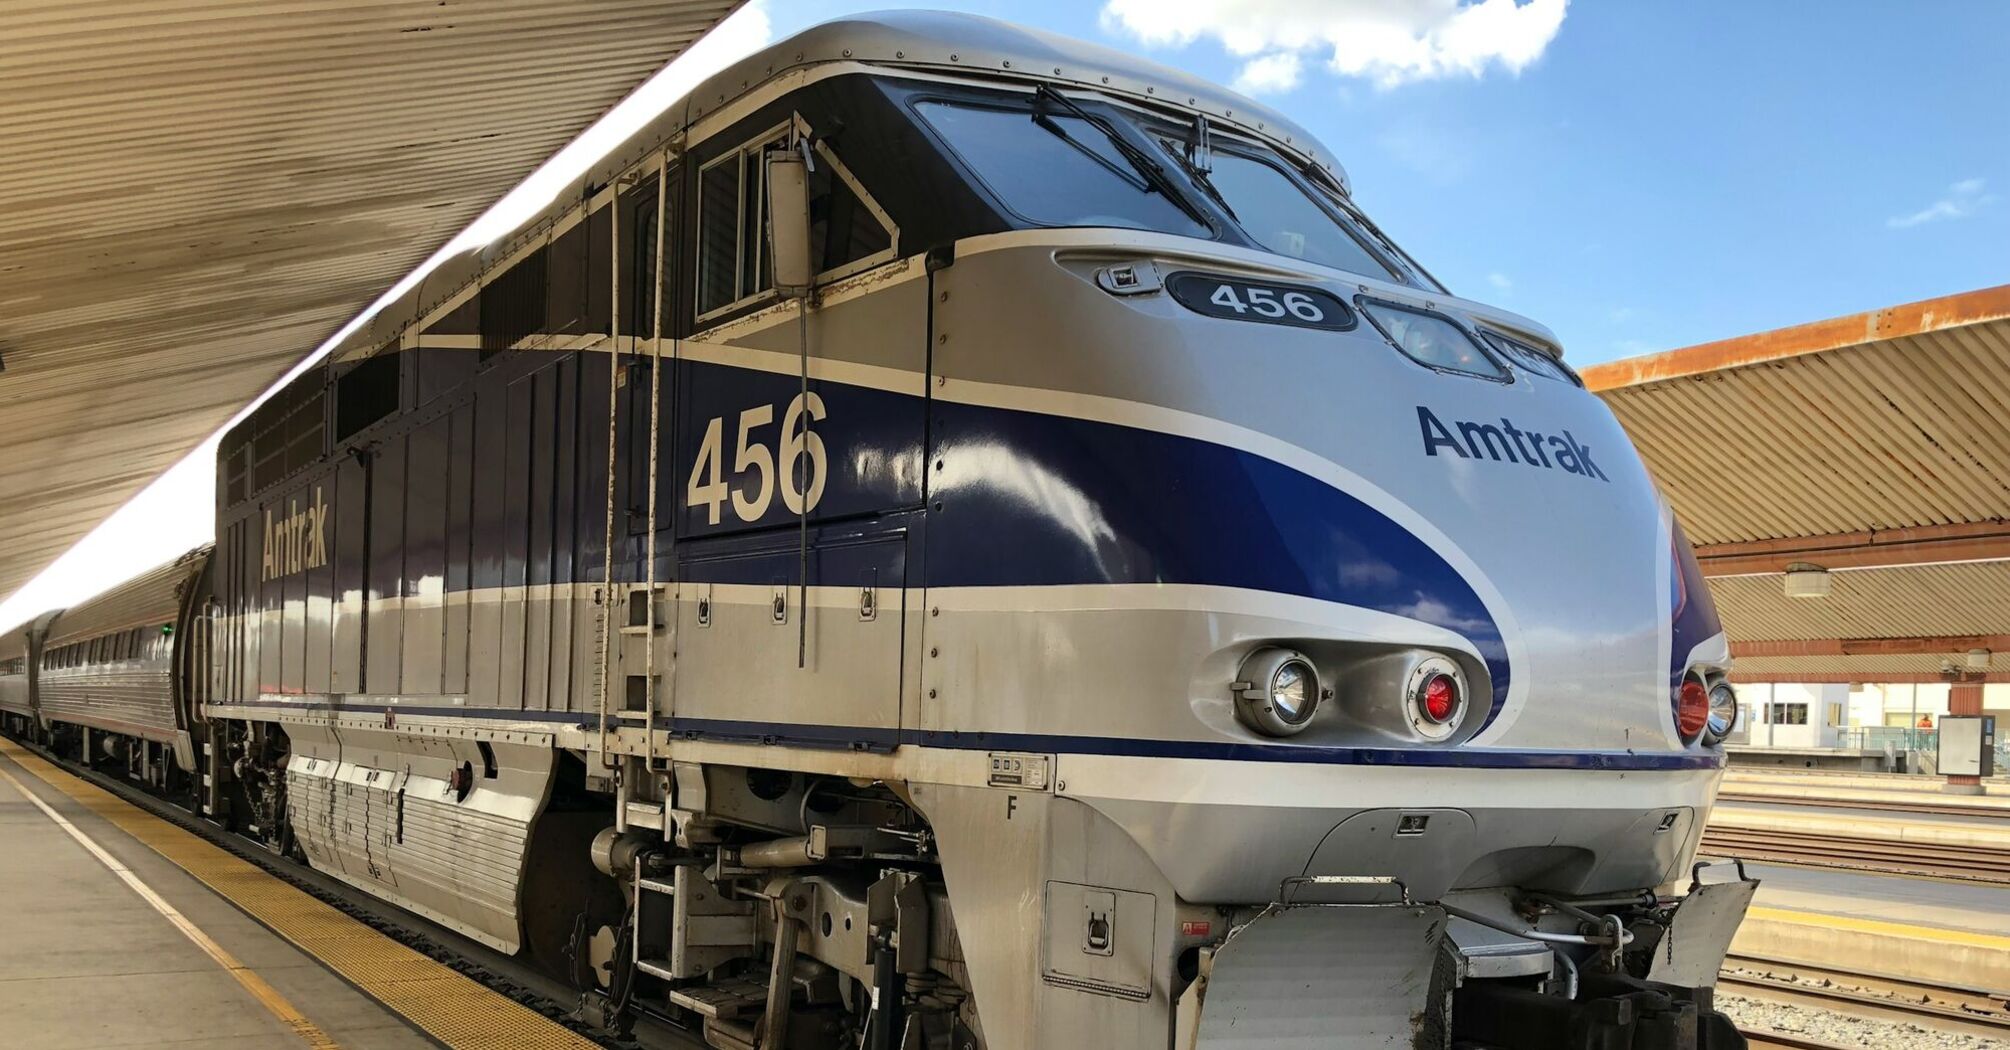 Amtrak train parked at a station platform